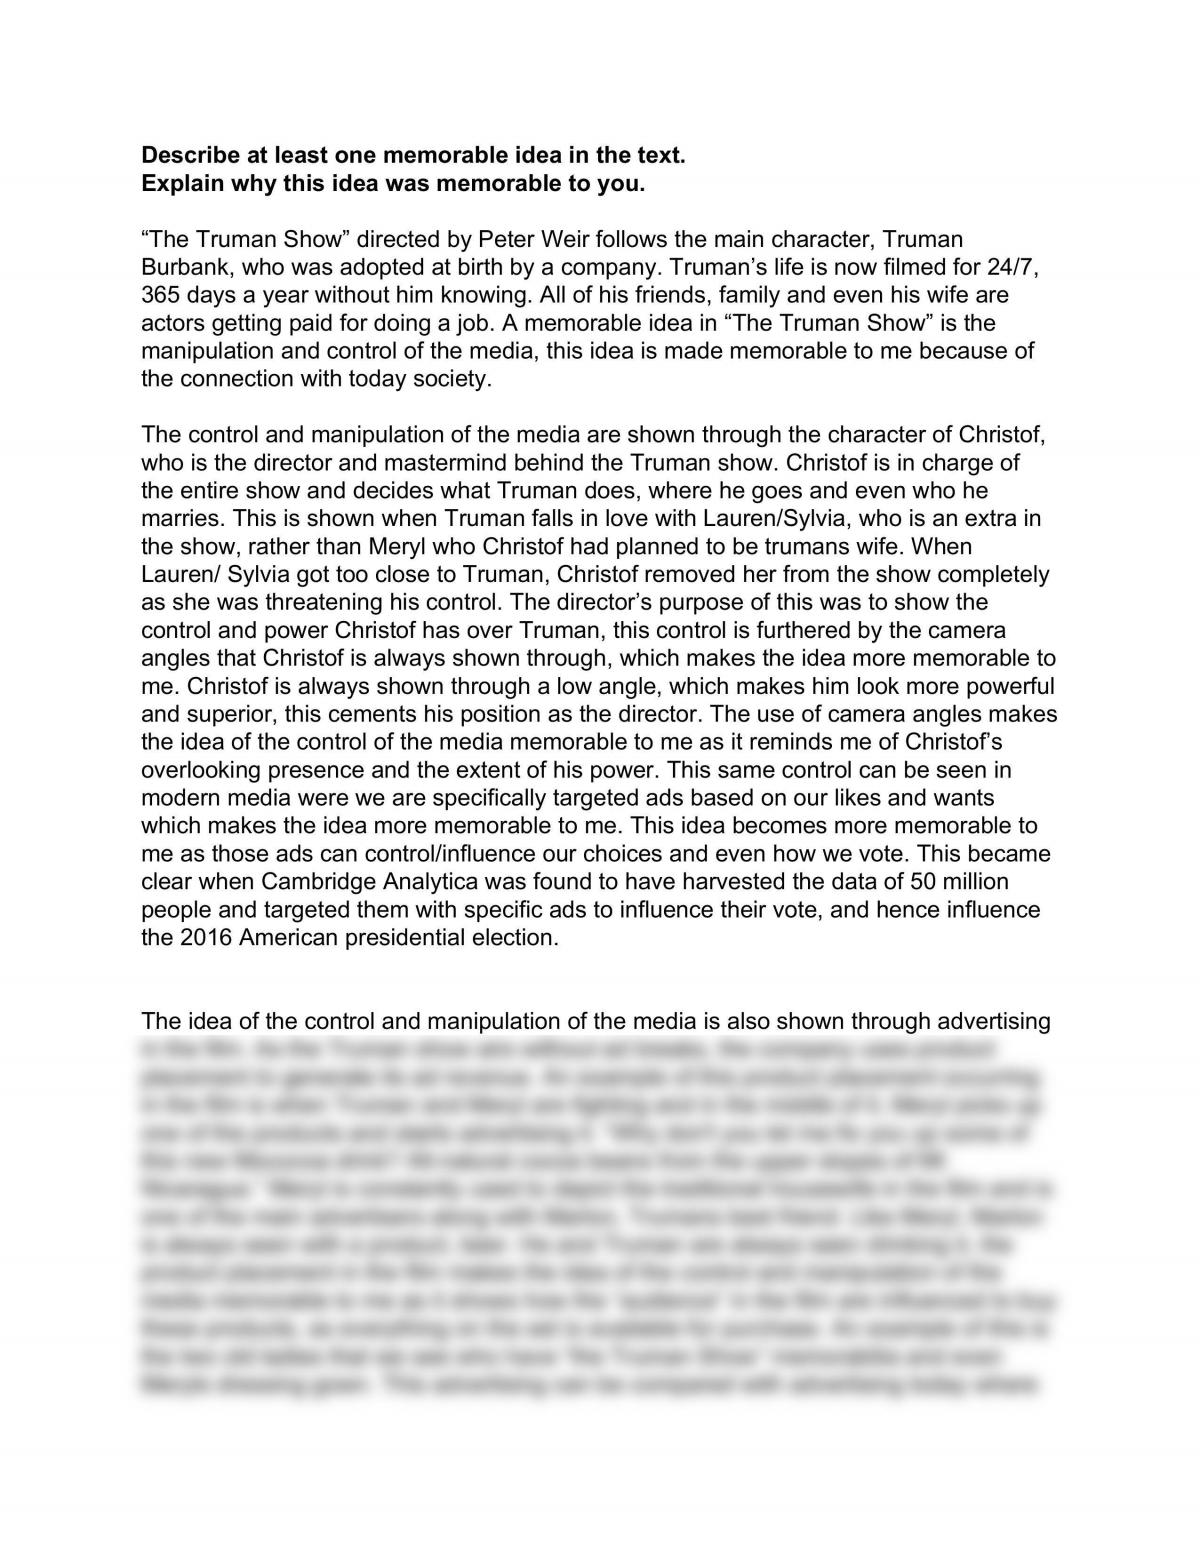 Реферат: The Truman Show Essay Research Paper 2